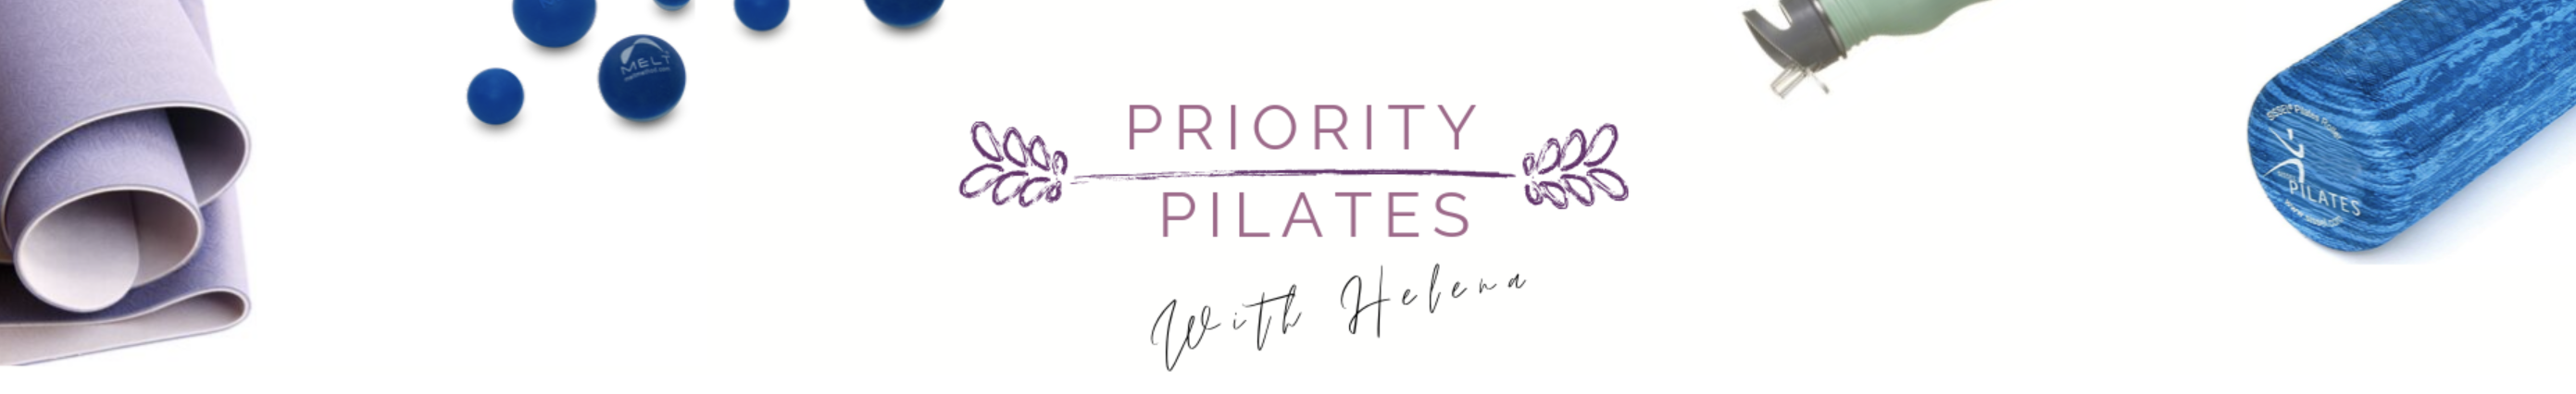 Priority Pilates Header Image 